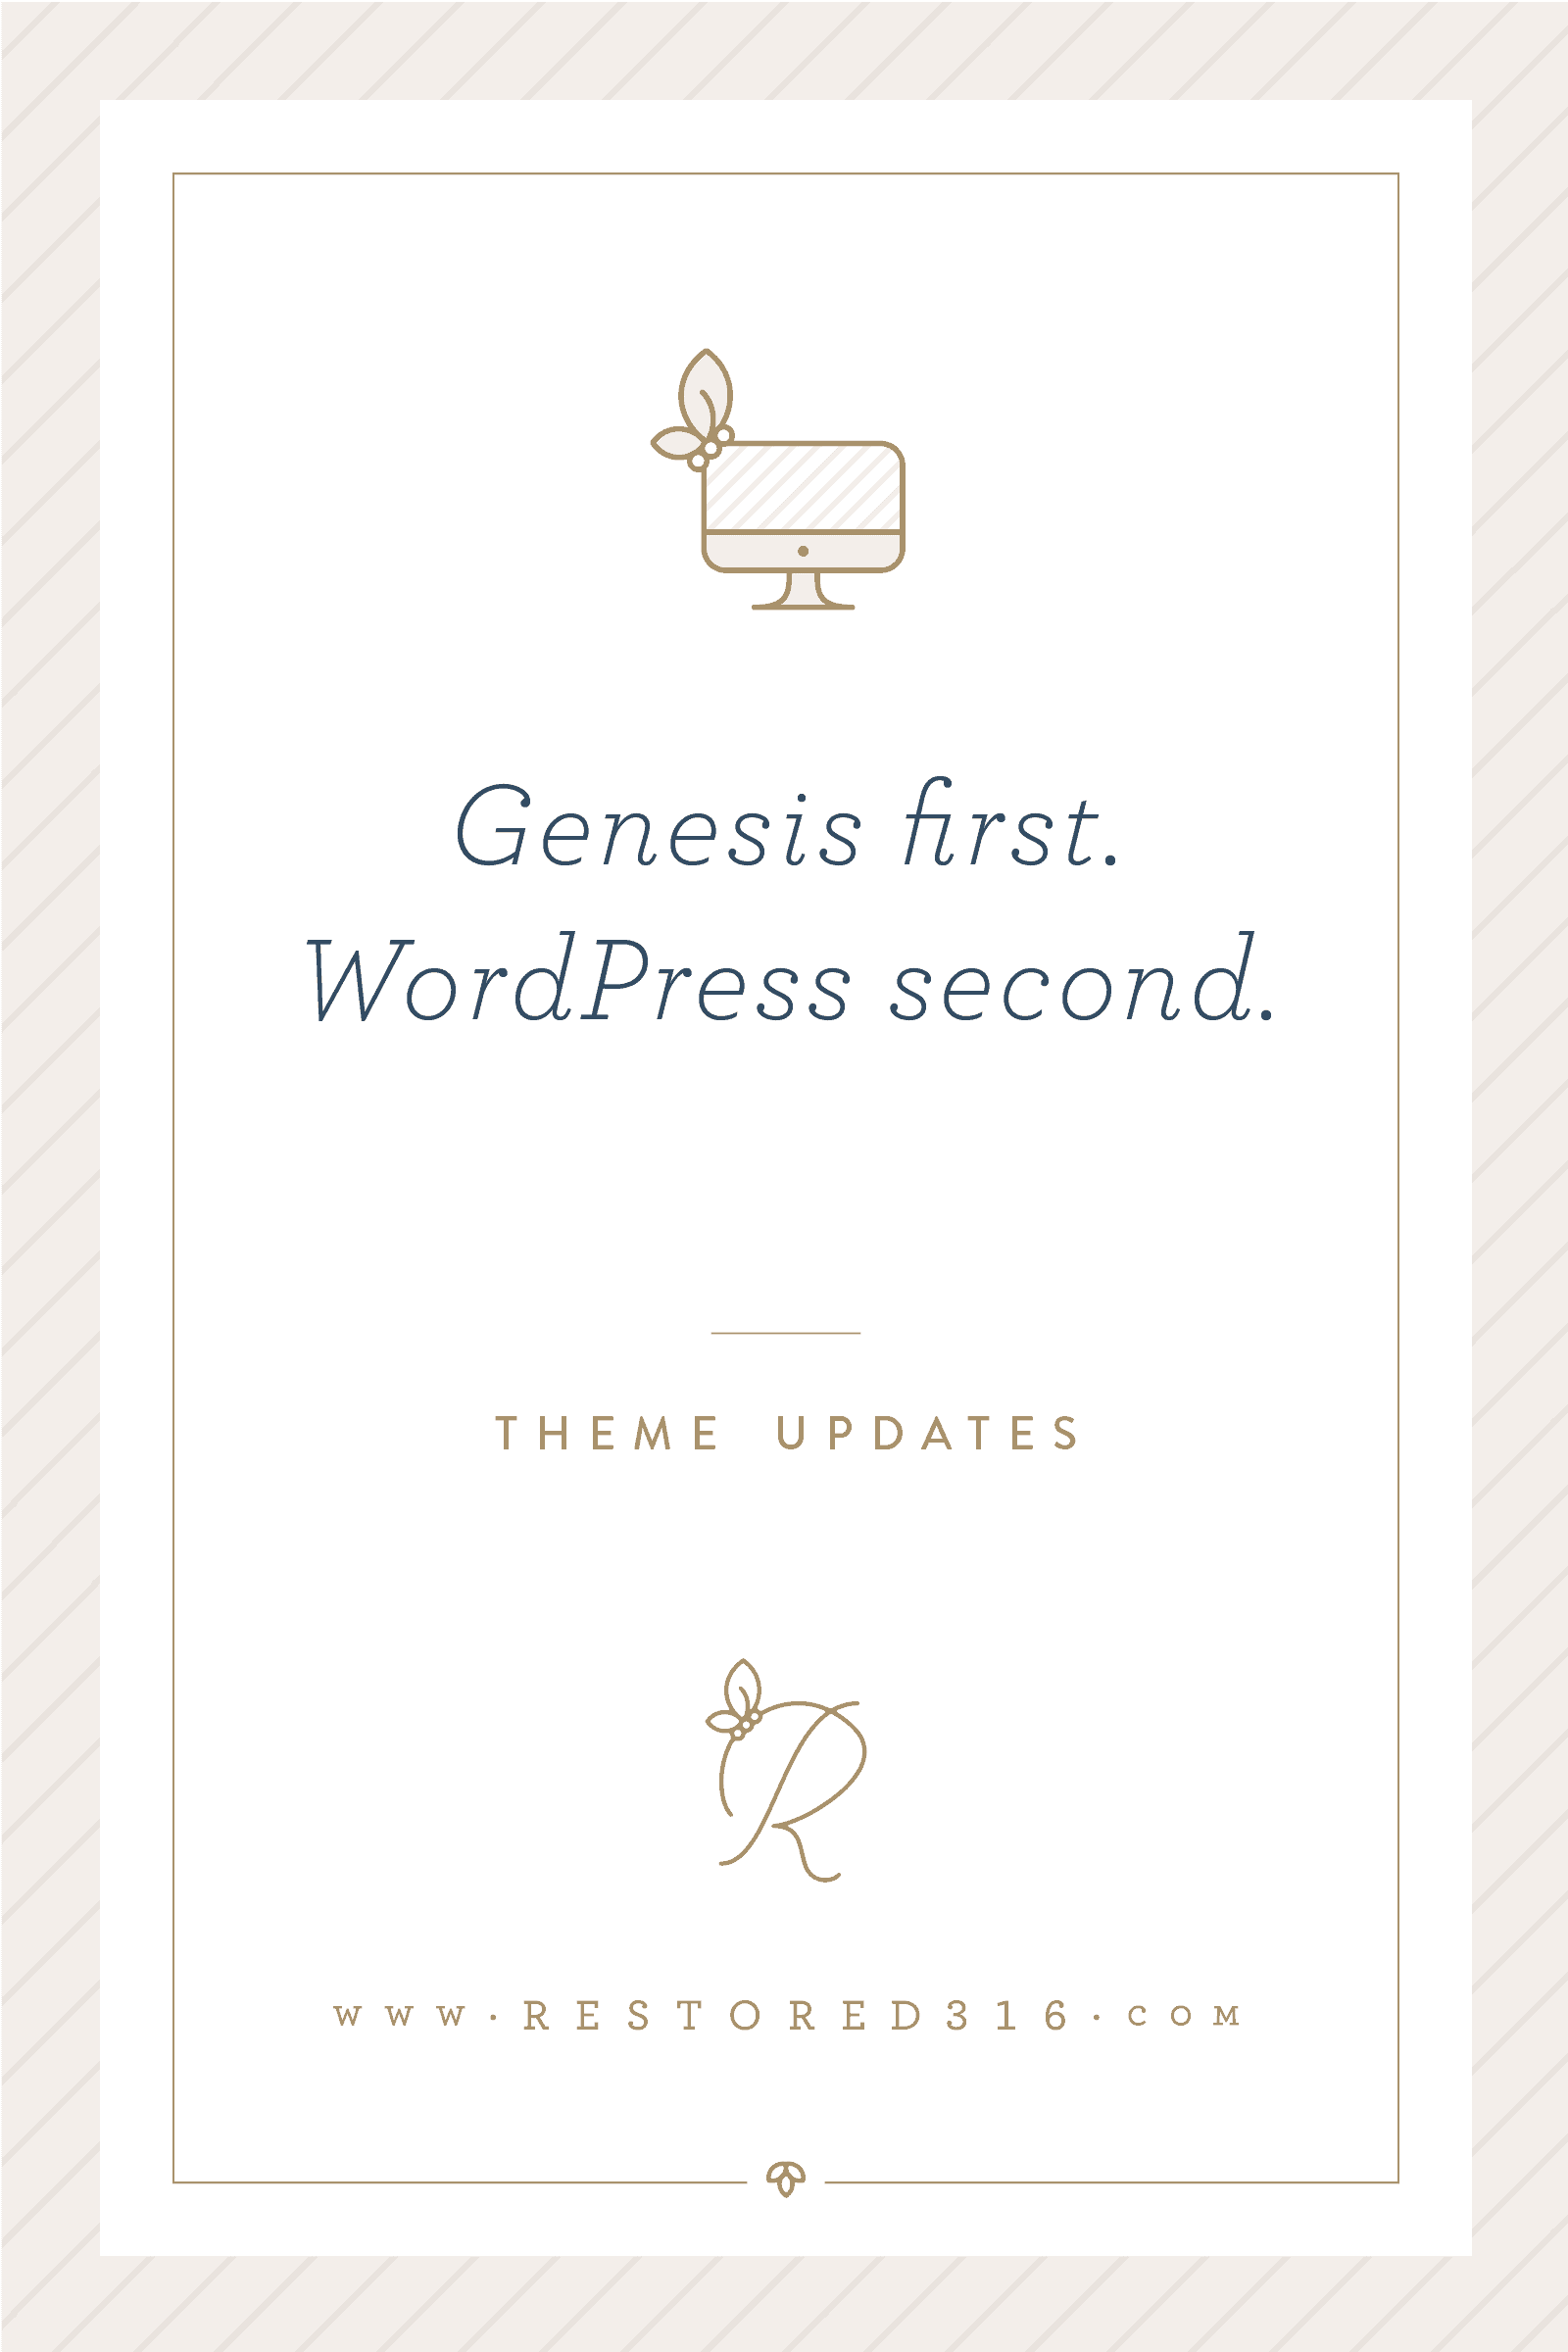 Genesis first. WordPress second.